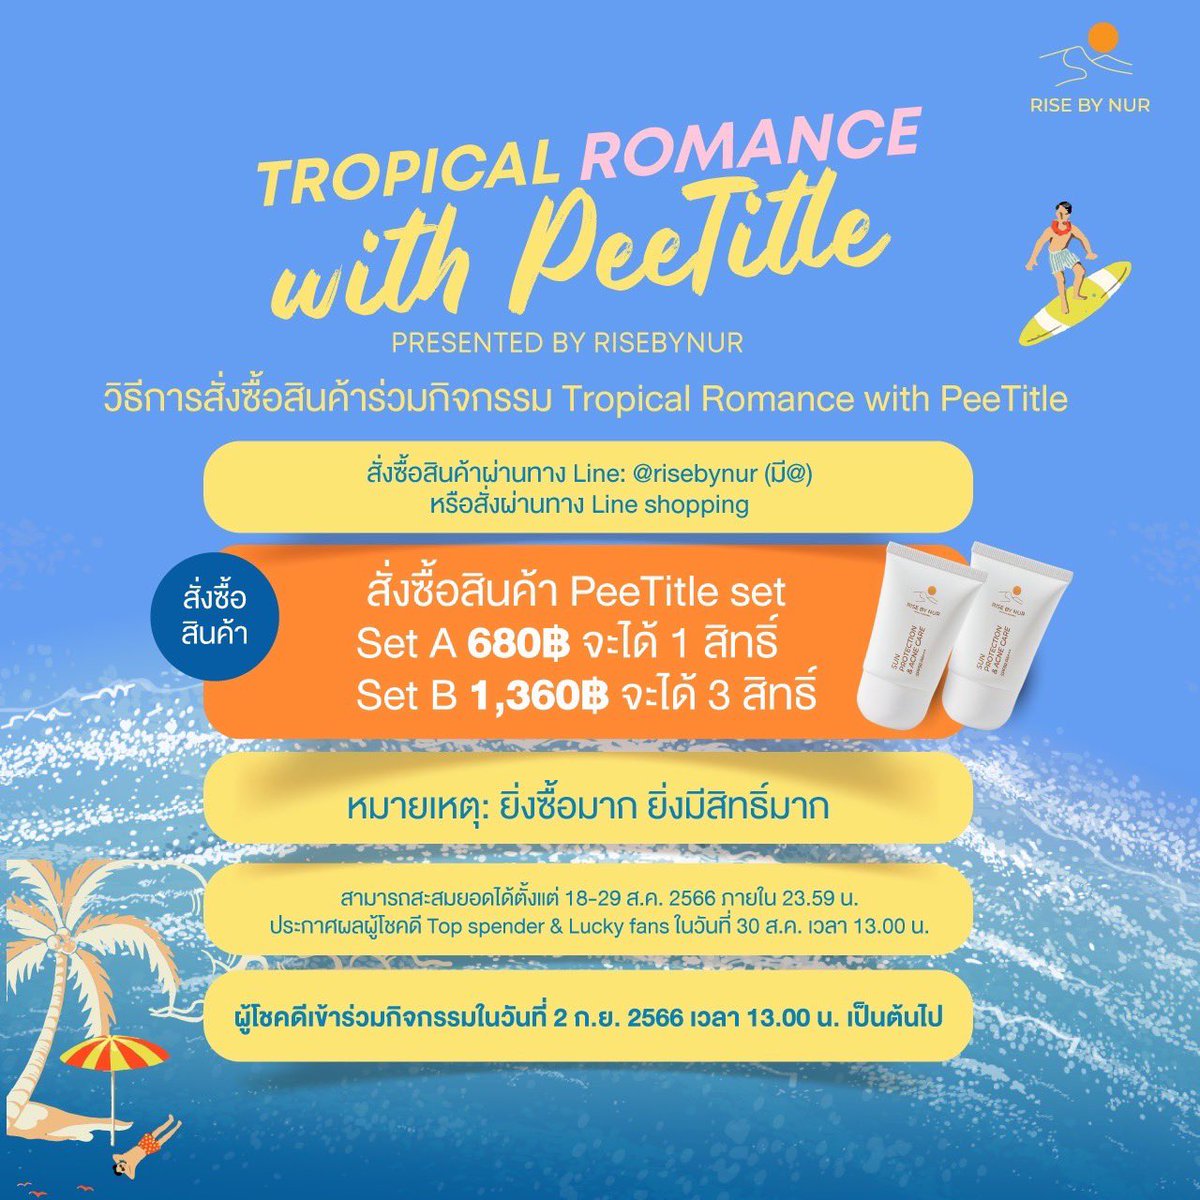 Tropical Romance with PeeTitle Presented by risebynur🌼 มาร่วมสร้างความสุขไปพร้อมกันในวันที่ 2 ก.ย. 66 ตั้งแต่เวลา 15.00 น. เป็นต้นไป

🩵 สามารถสั่งซื้อและสะสมยอดได้ตั้งแต่วันนี้ 29 ส.ค. 2566 ภายใน 23.59 น. 
#TropicalRomancexPeeTitle